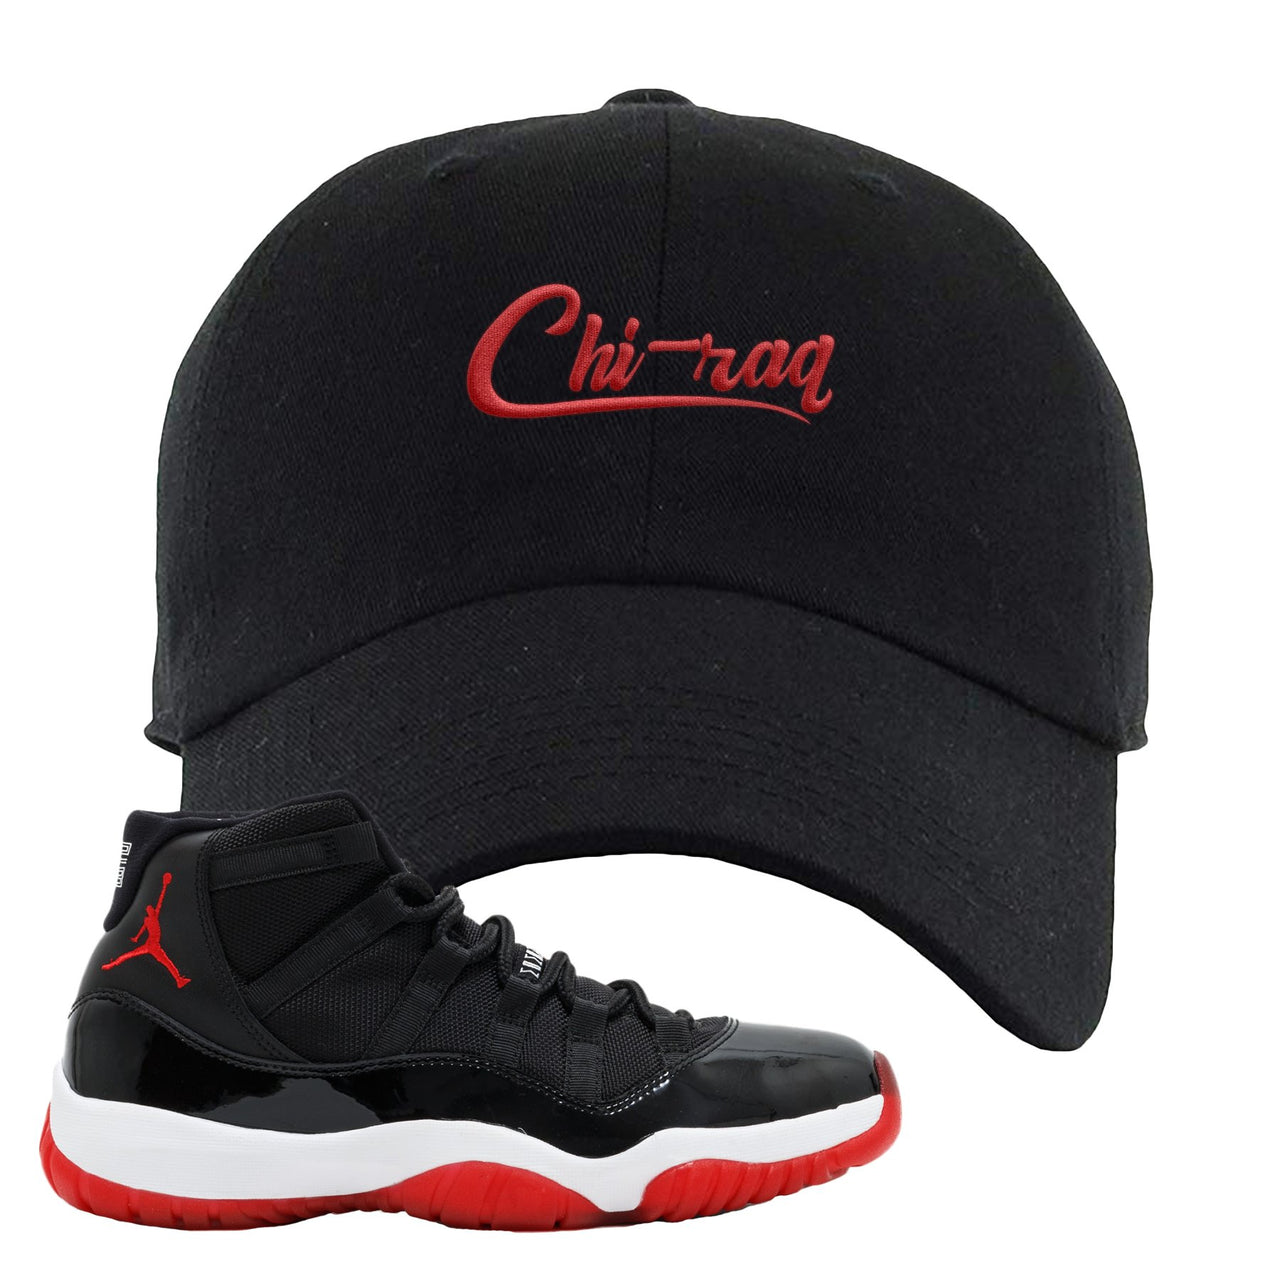 Jordan 11 Bred Chi-raq Black Sneaker Hook Up Dad Hat